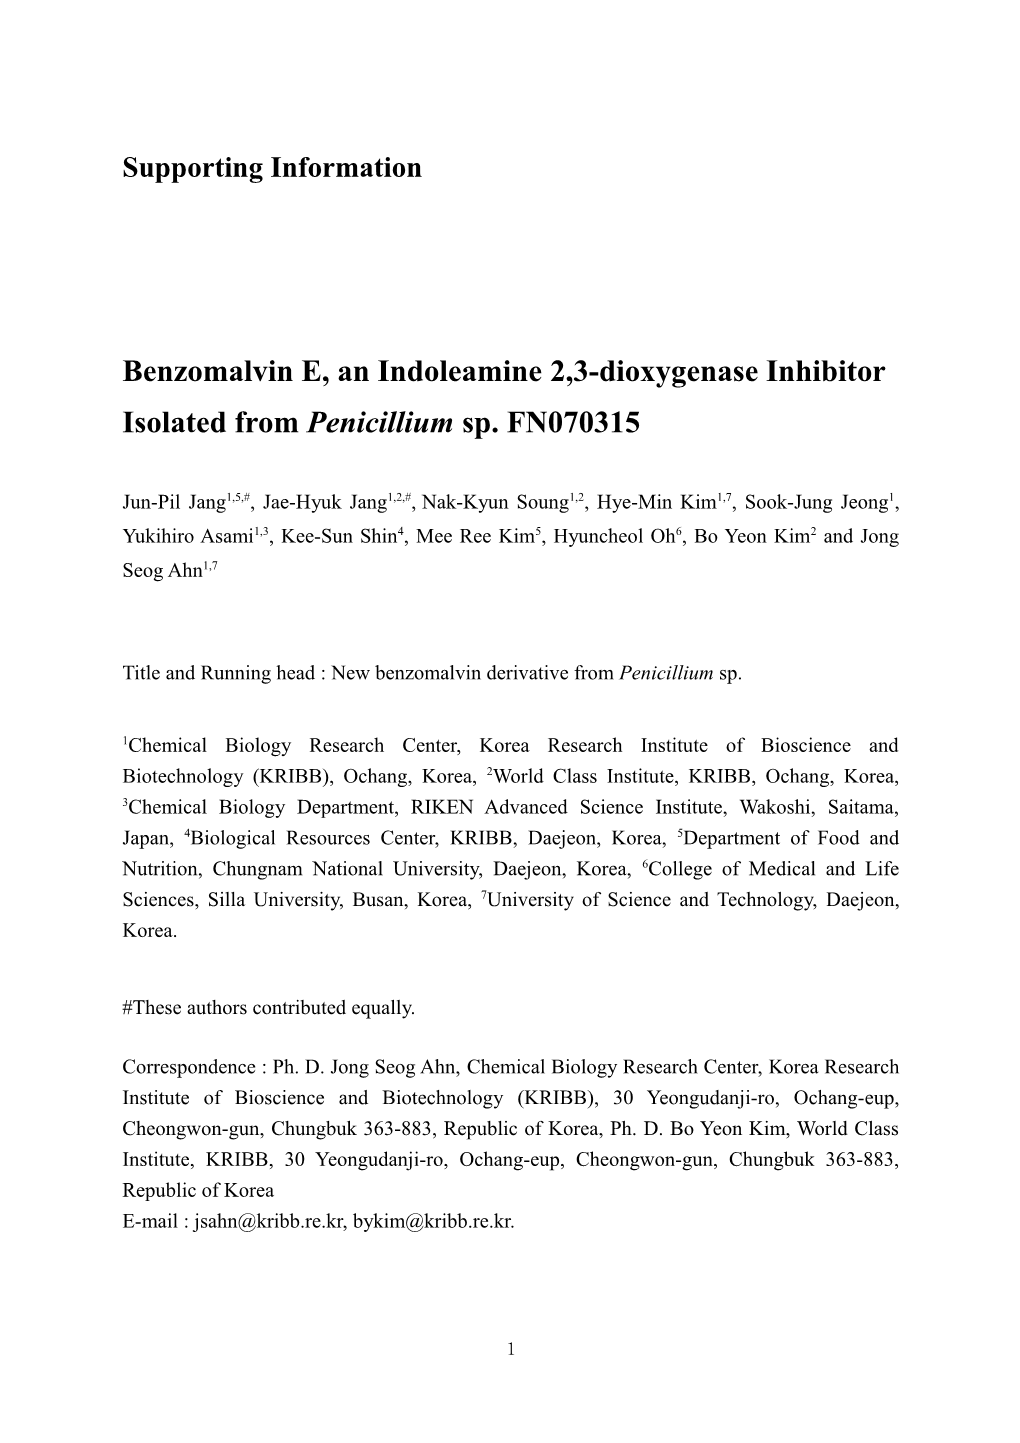 Benzomalvin E, an Indoleamine2,3-Dioxygenase Inhibitor Isolated from Penicillium Sp. FN070315